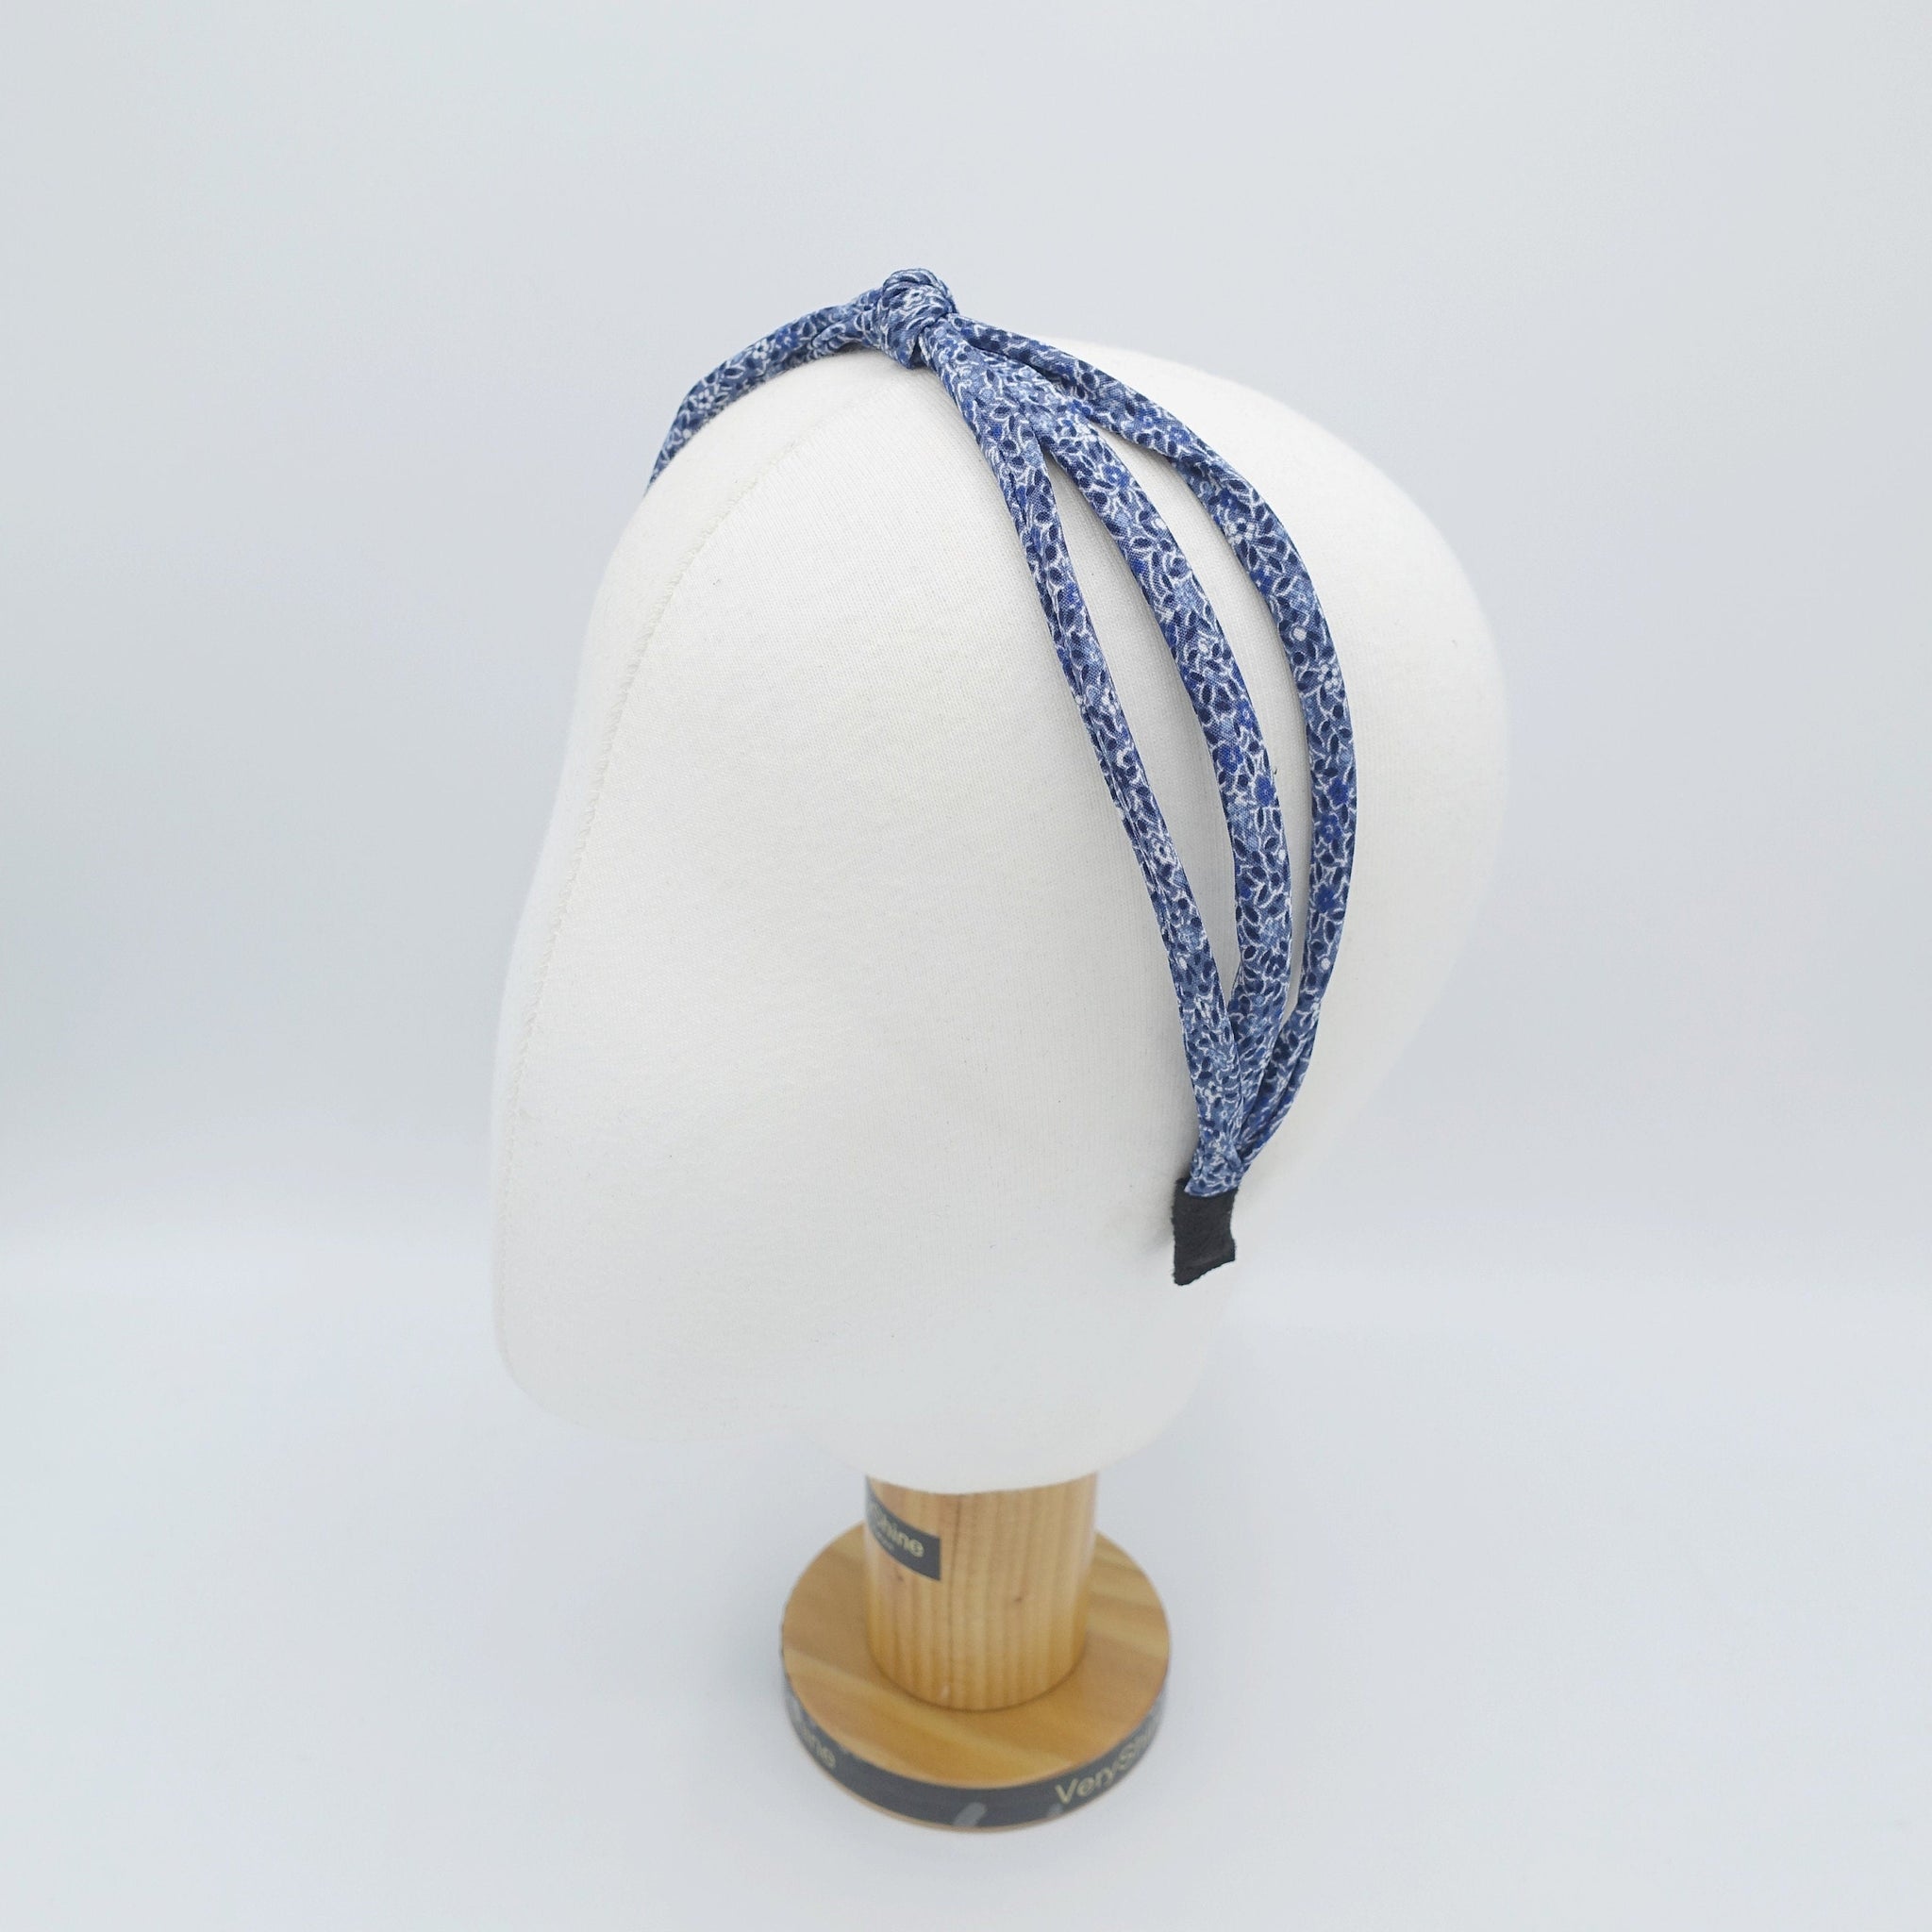 veryshine.com Headband Navy flower petal triple strand headband wired thin hairband floral women hair accessory